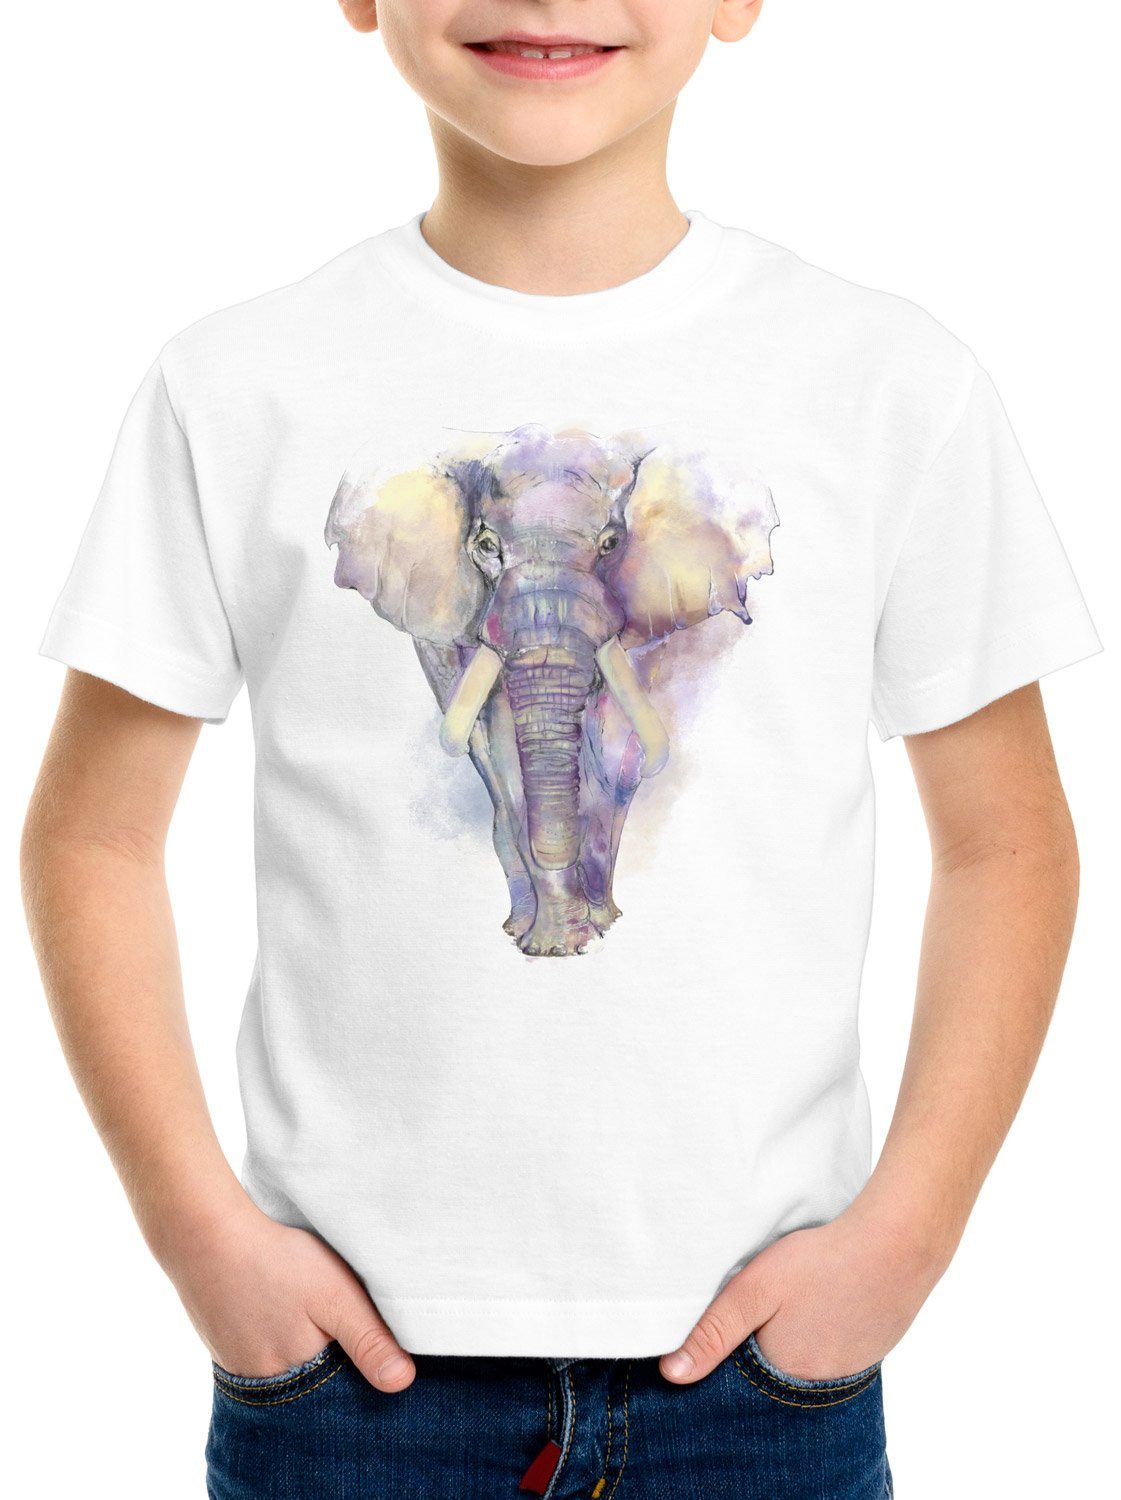 style3 Print-Shirt Kinder T-Shirt Aquarell Elefant elephant zoo urlaub